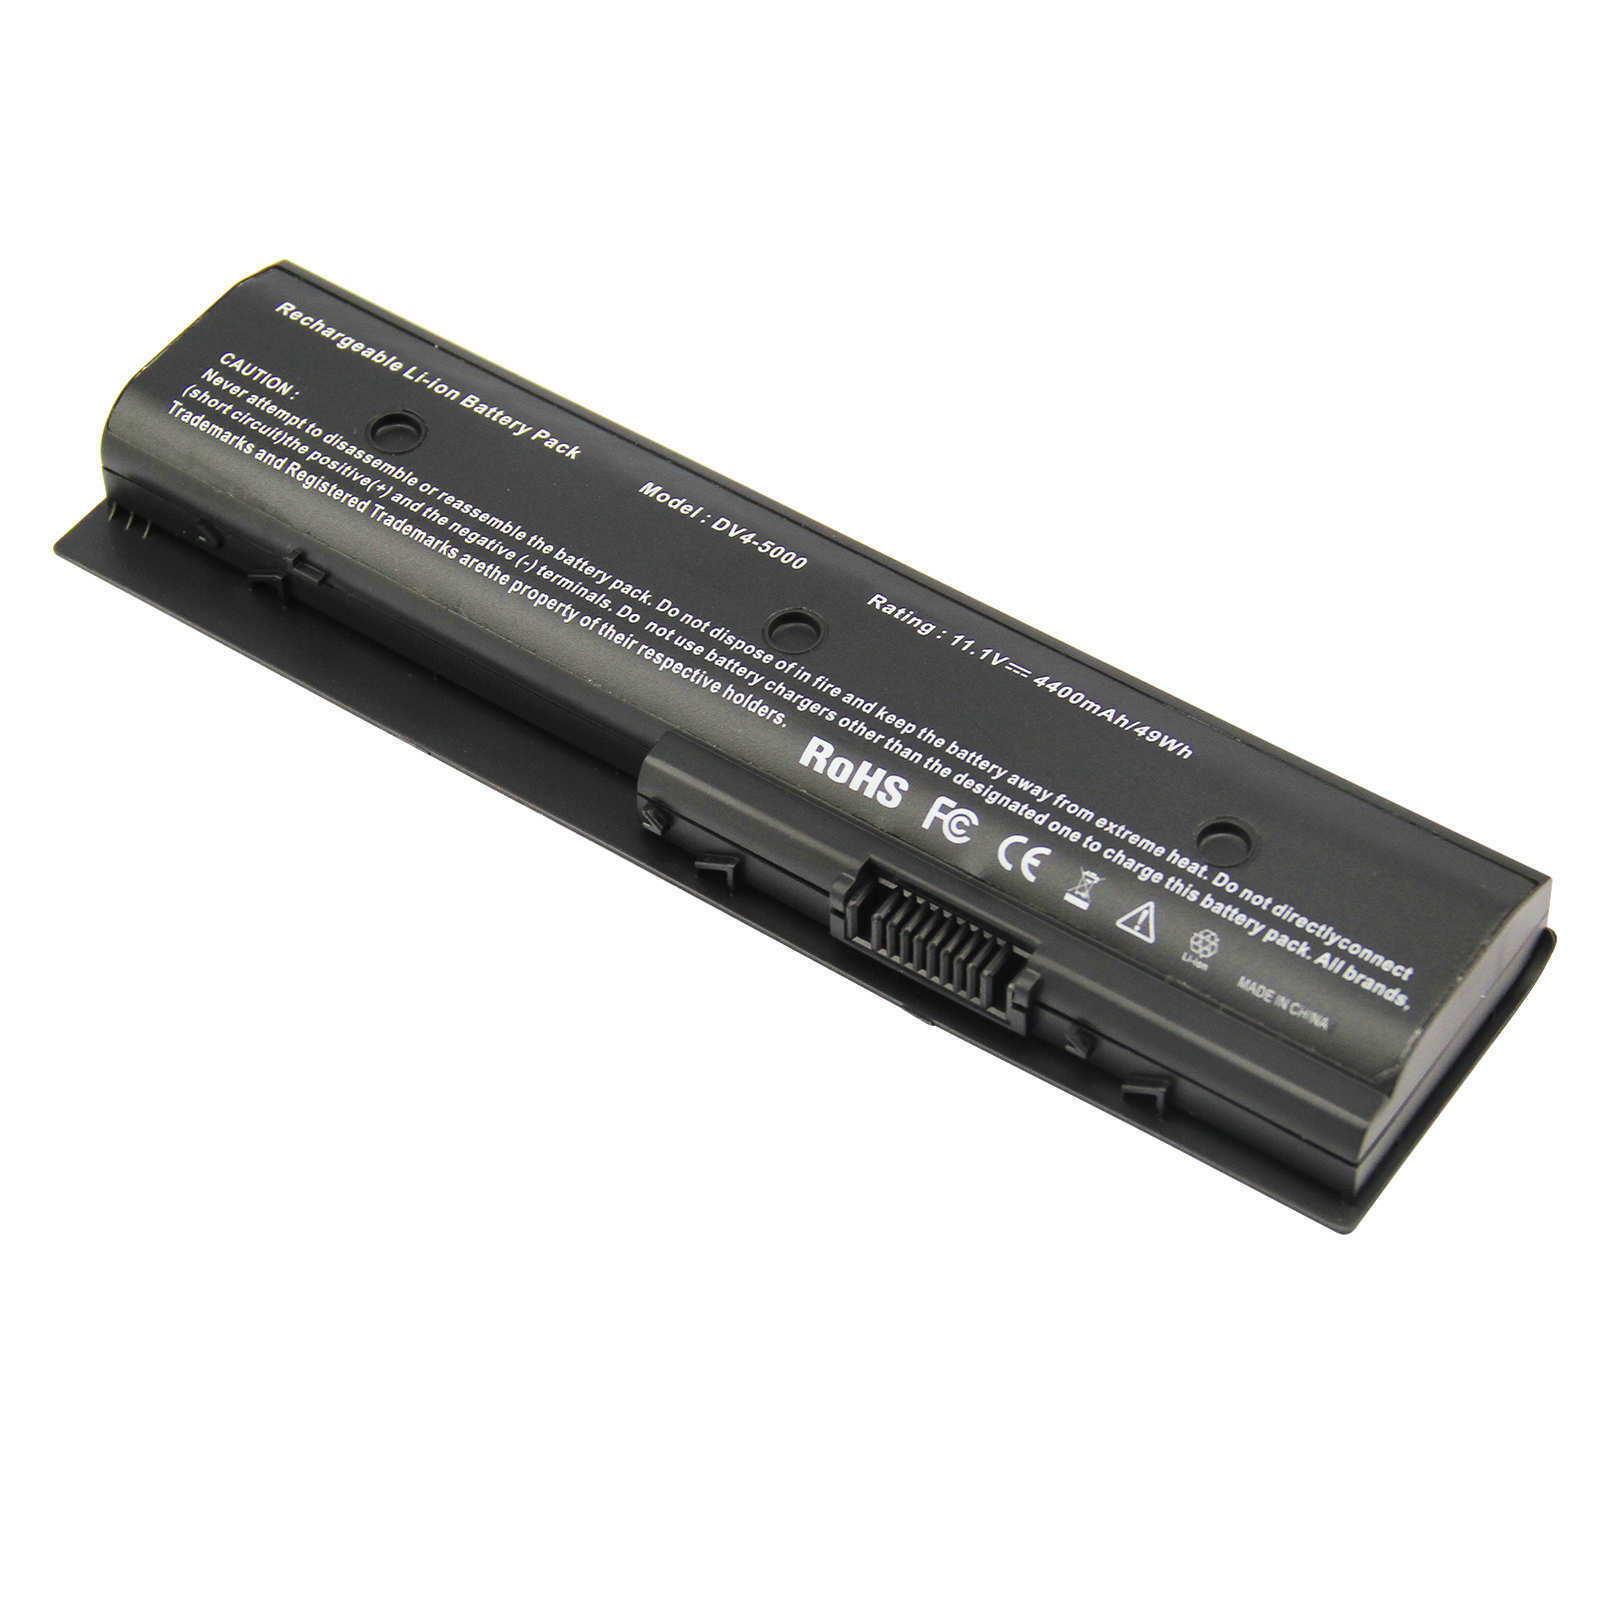 HP 671731-001 laptop battery